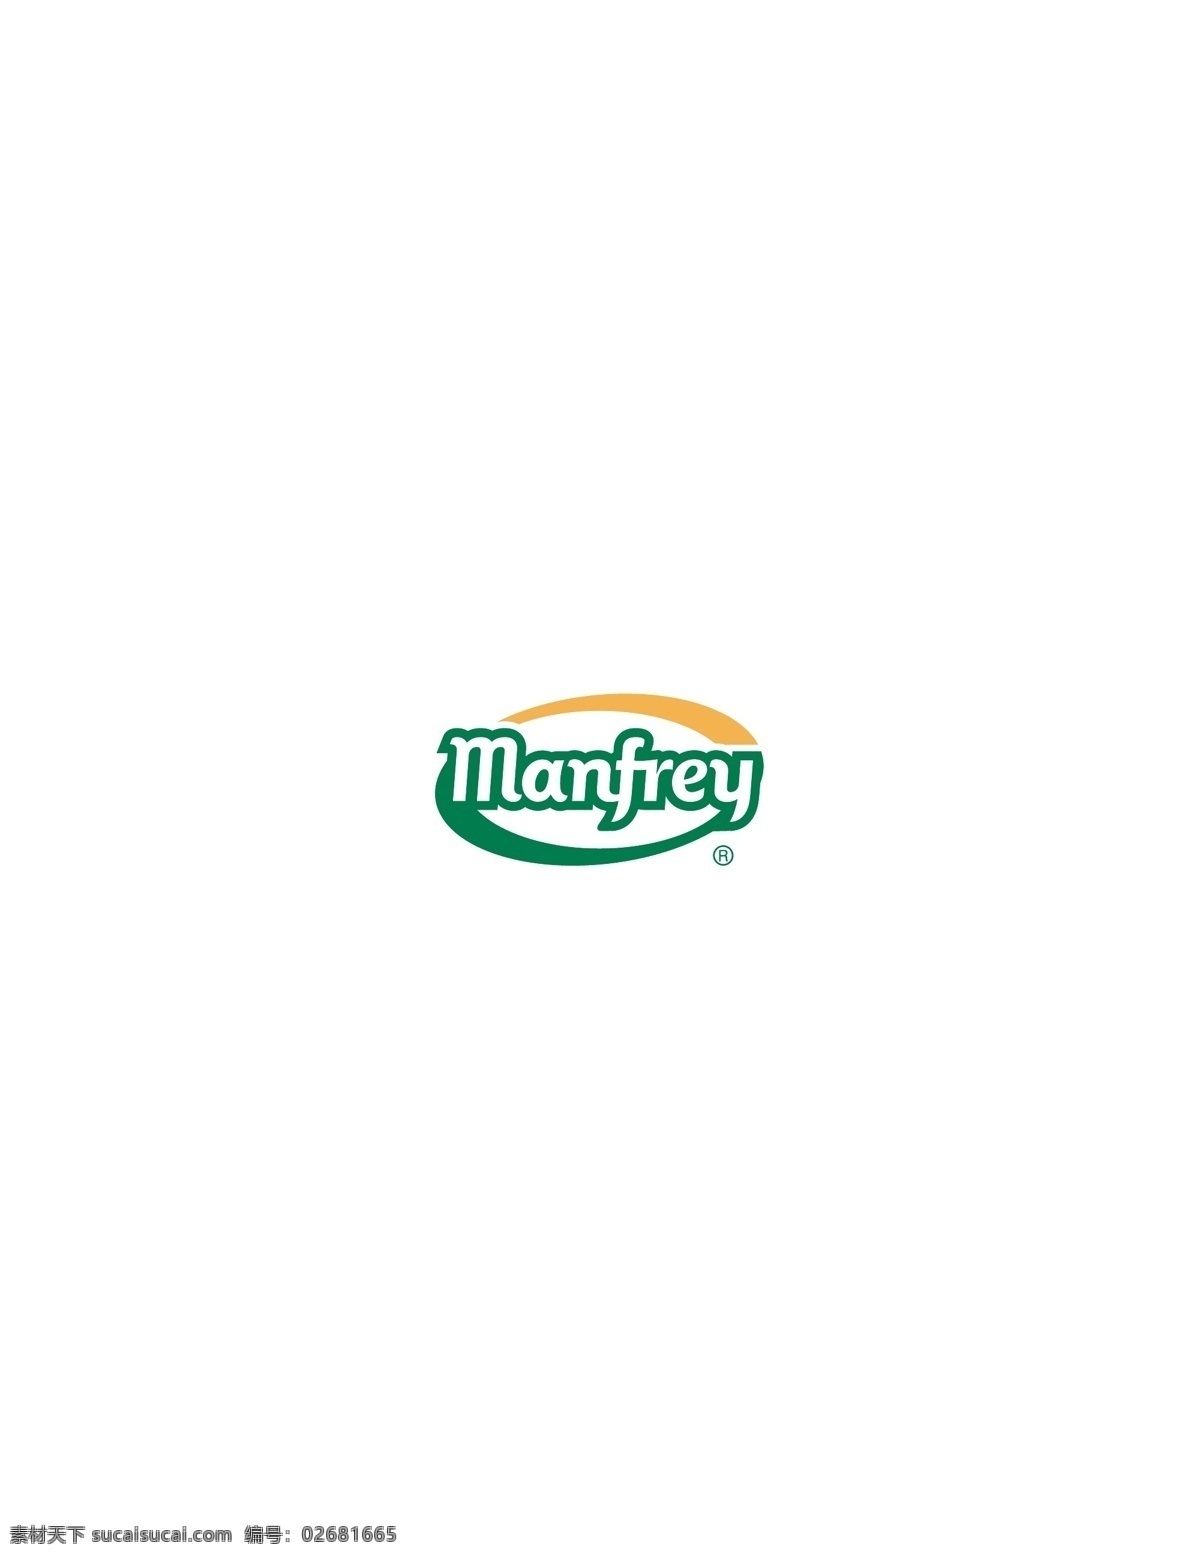 manfrey logo大全 logo 设计欣赏 商业矢量 矢量下载 食物 品牌 标志 标志设计 欣赏 网页矢量 矢量图 其他矢量图